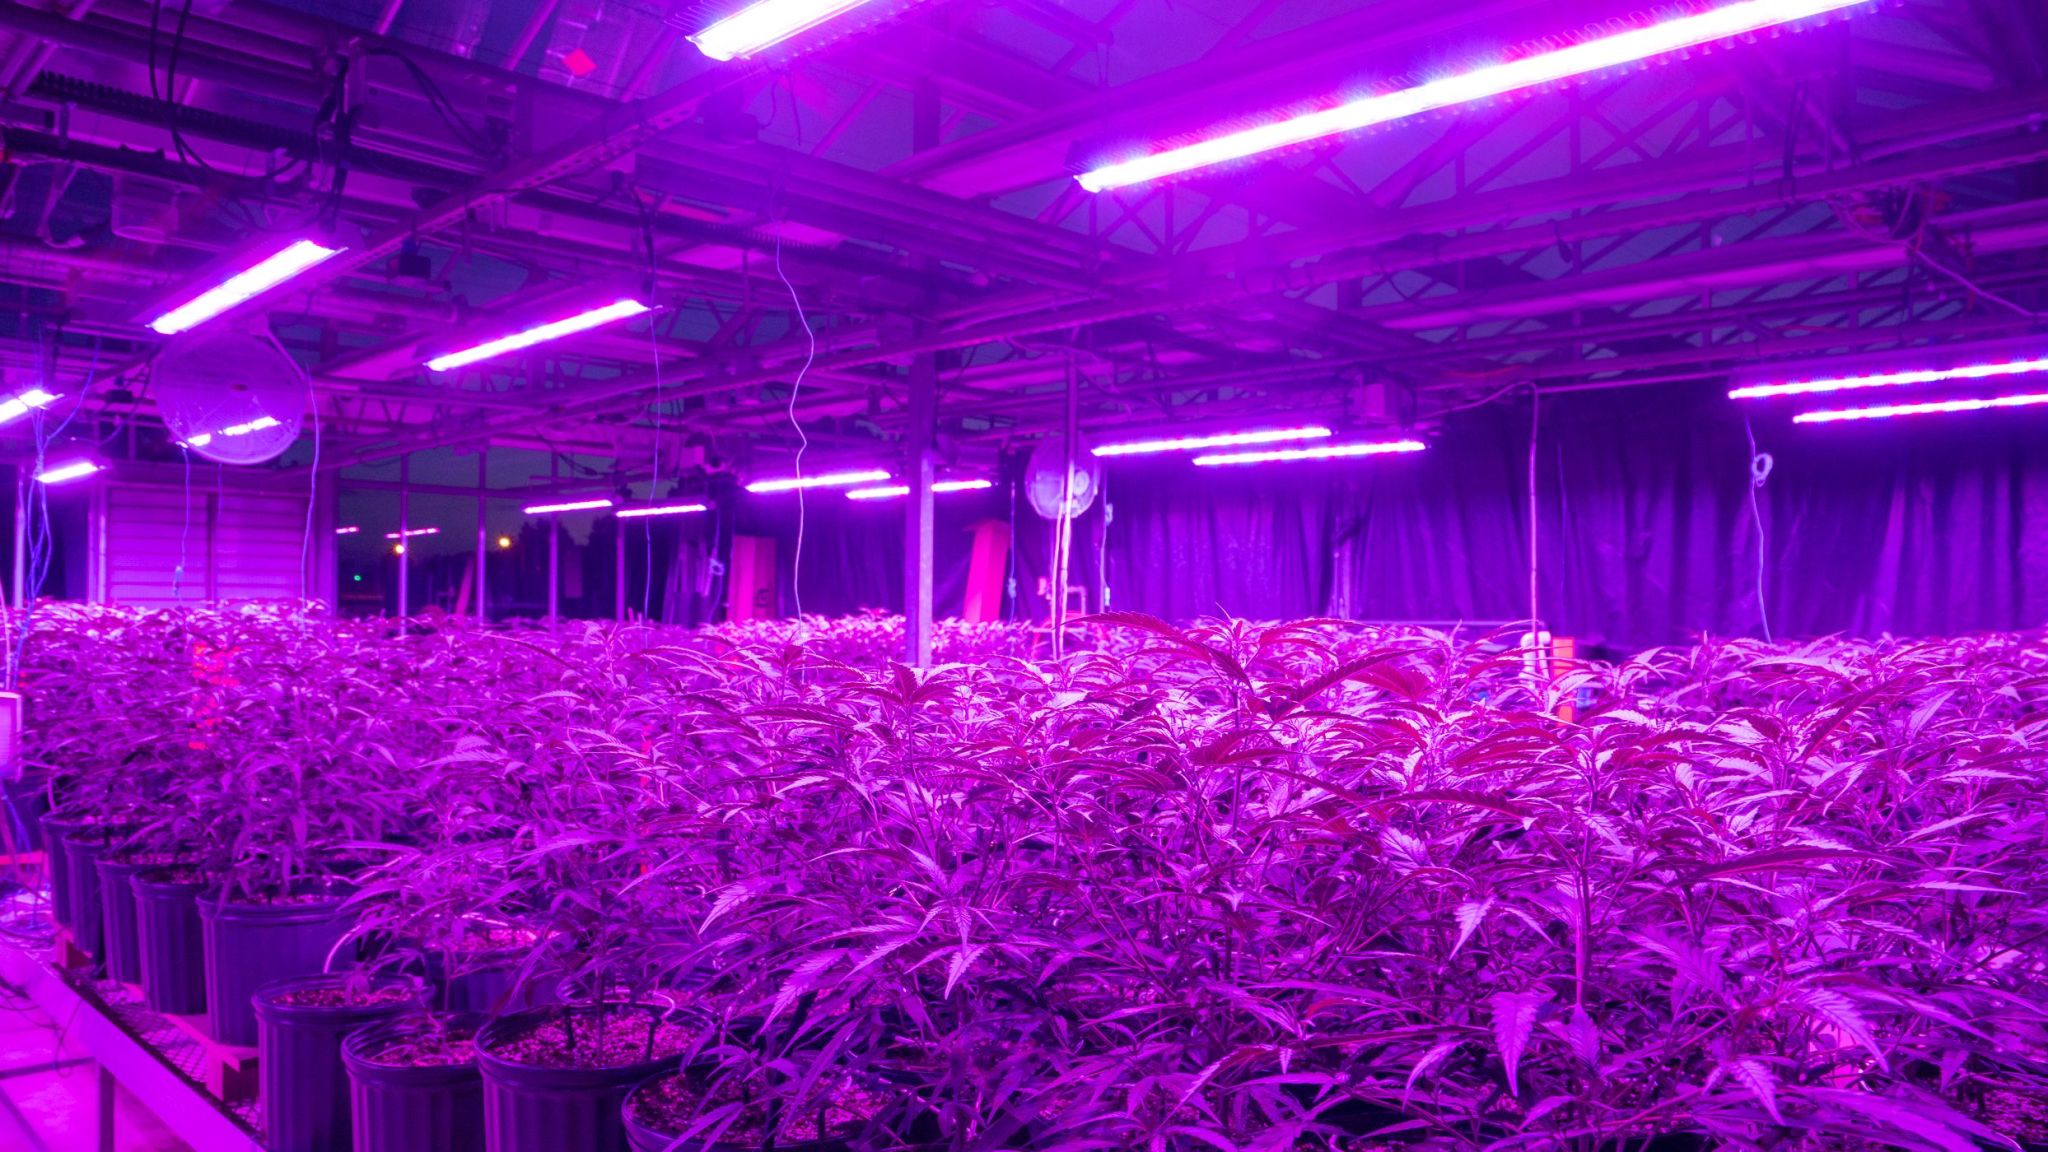 industrial hemp grown with far-red light spectrum in greenhouse